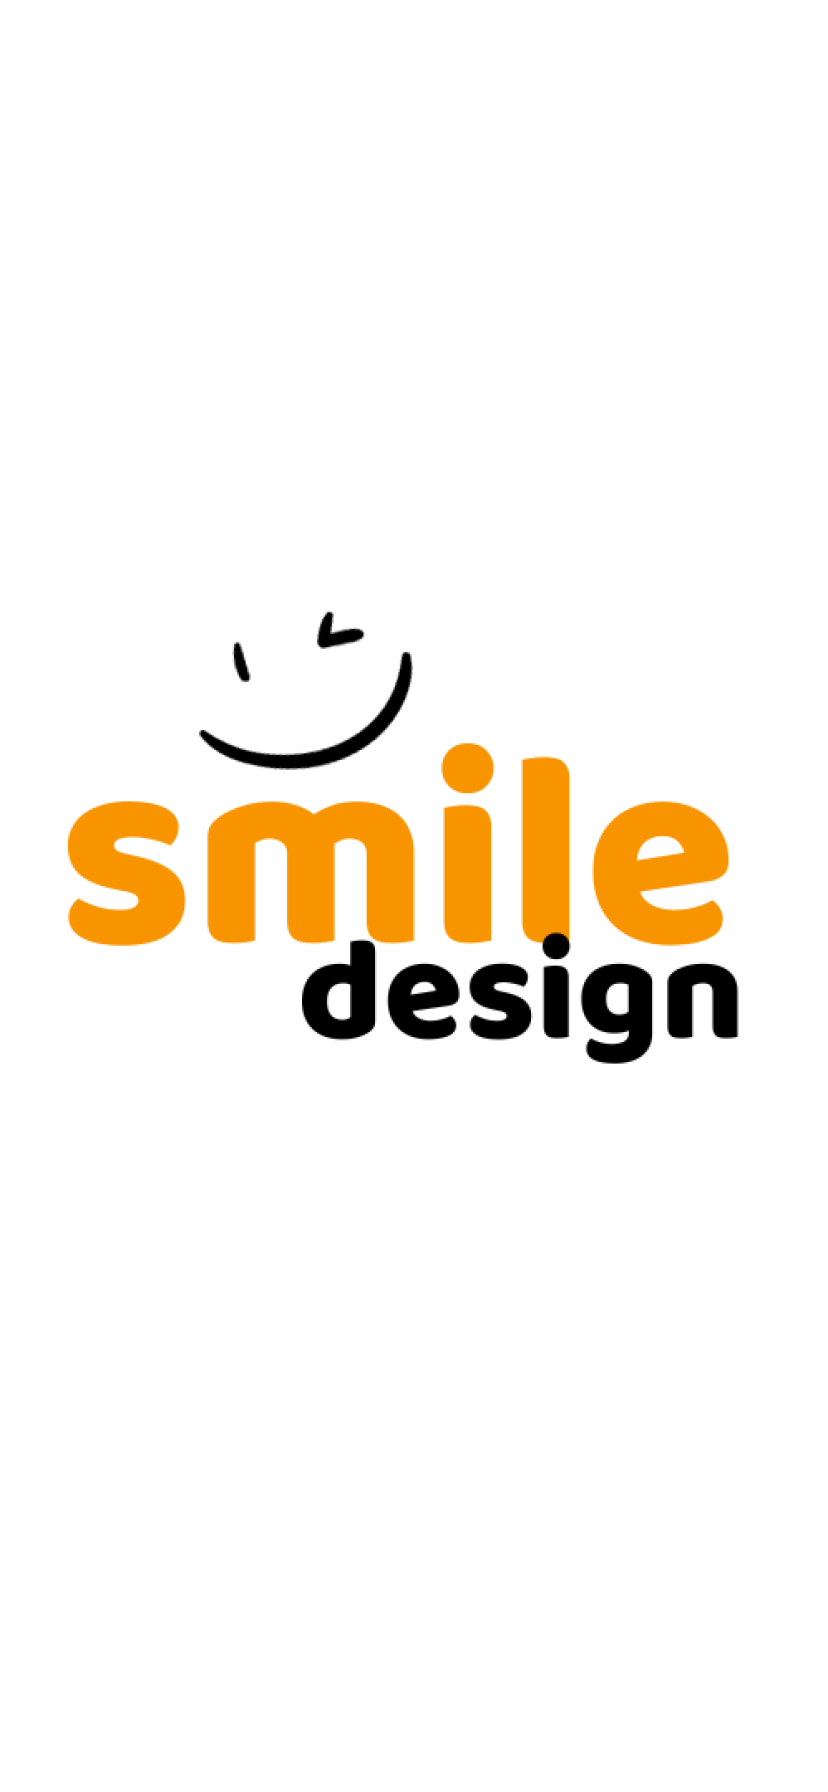 SmileDesign.org Domain Name For Sale